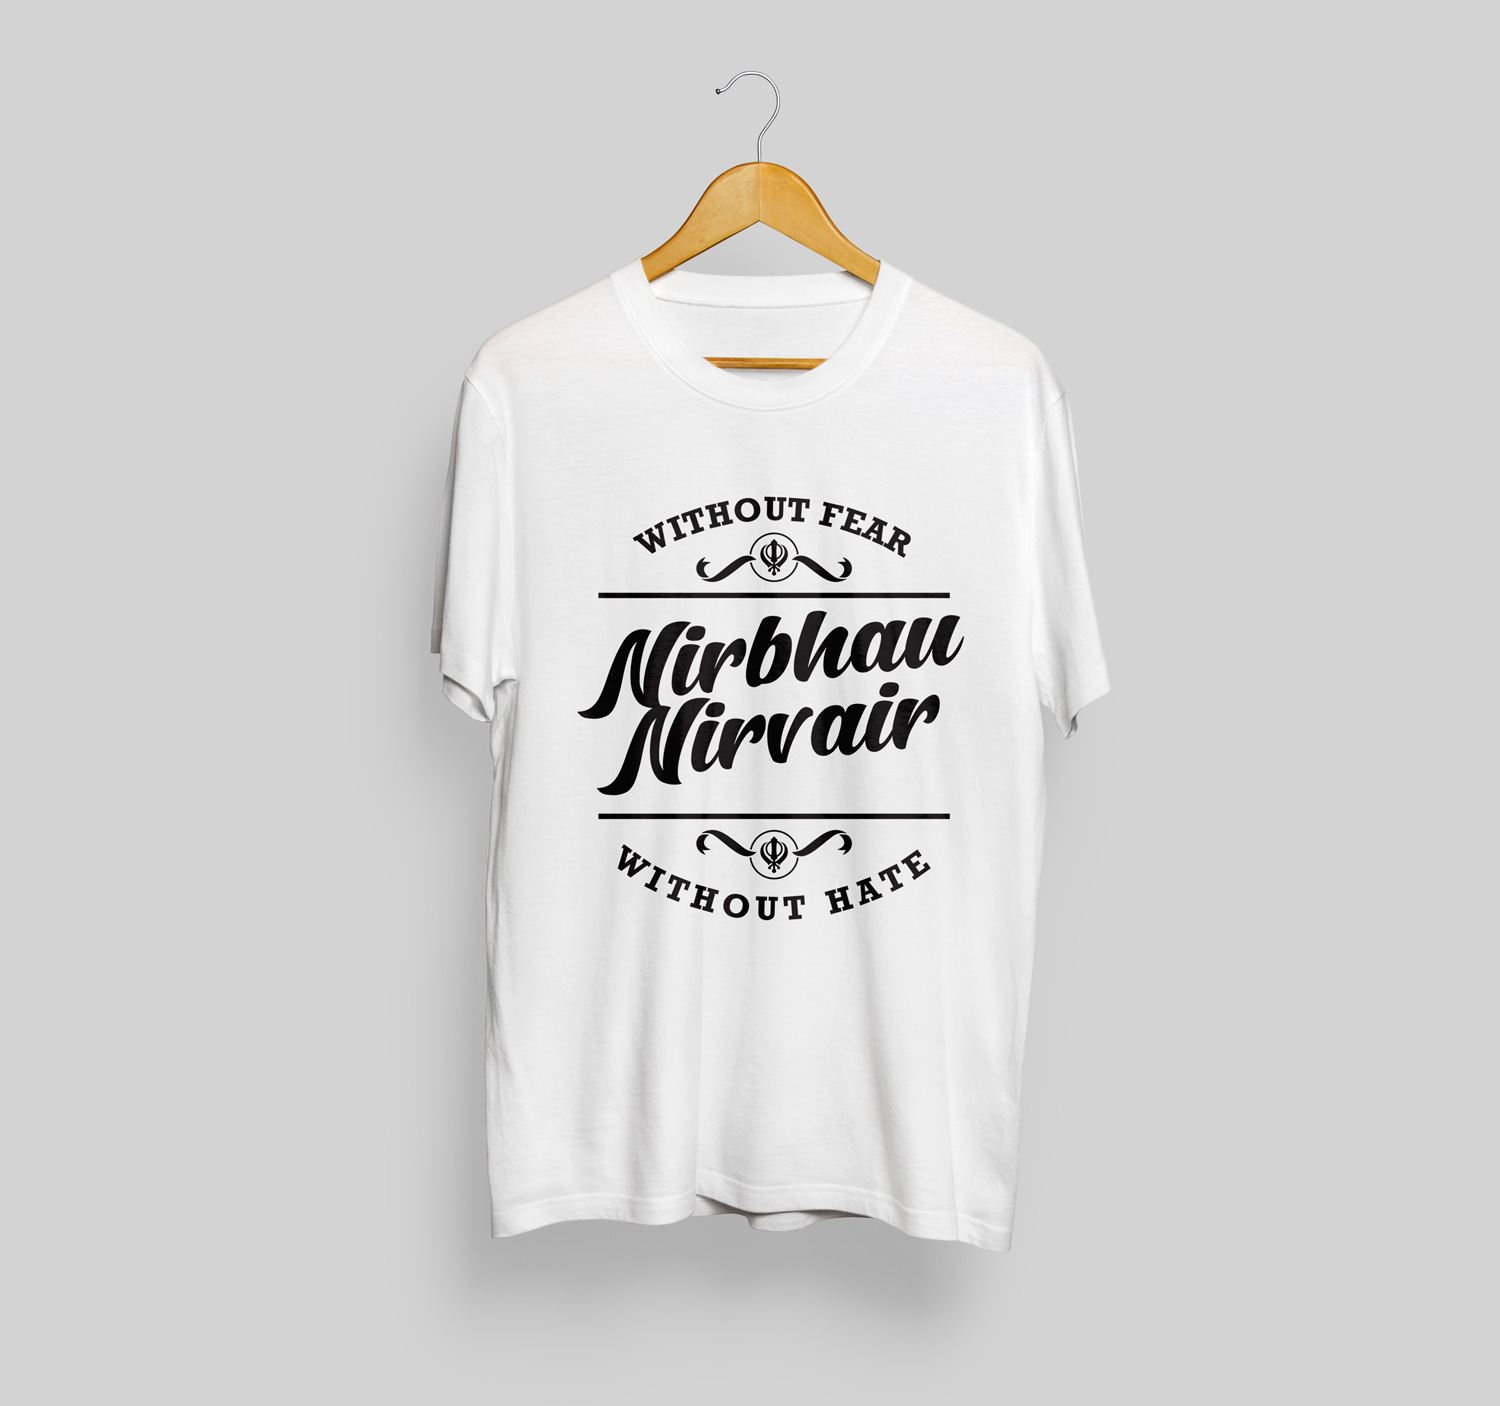 Nirbhau Nirvair T-shirt Design